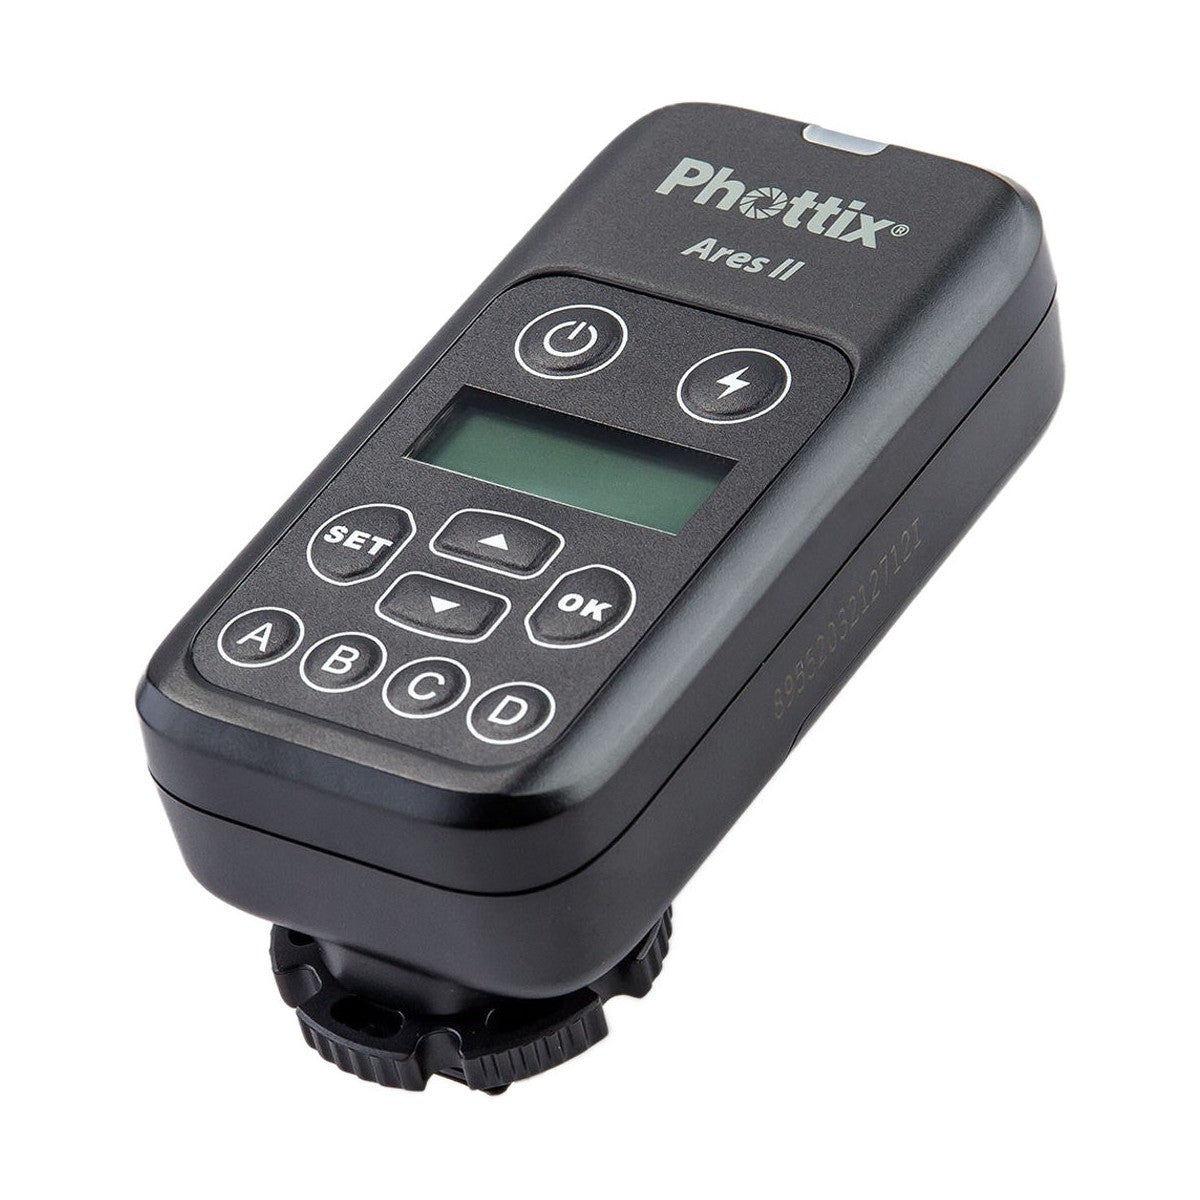 Phottix Ares II Wireless Flash Trigger Transmitter